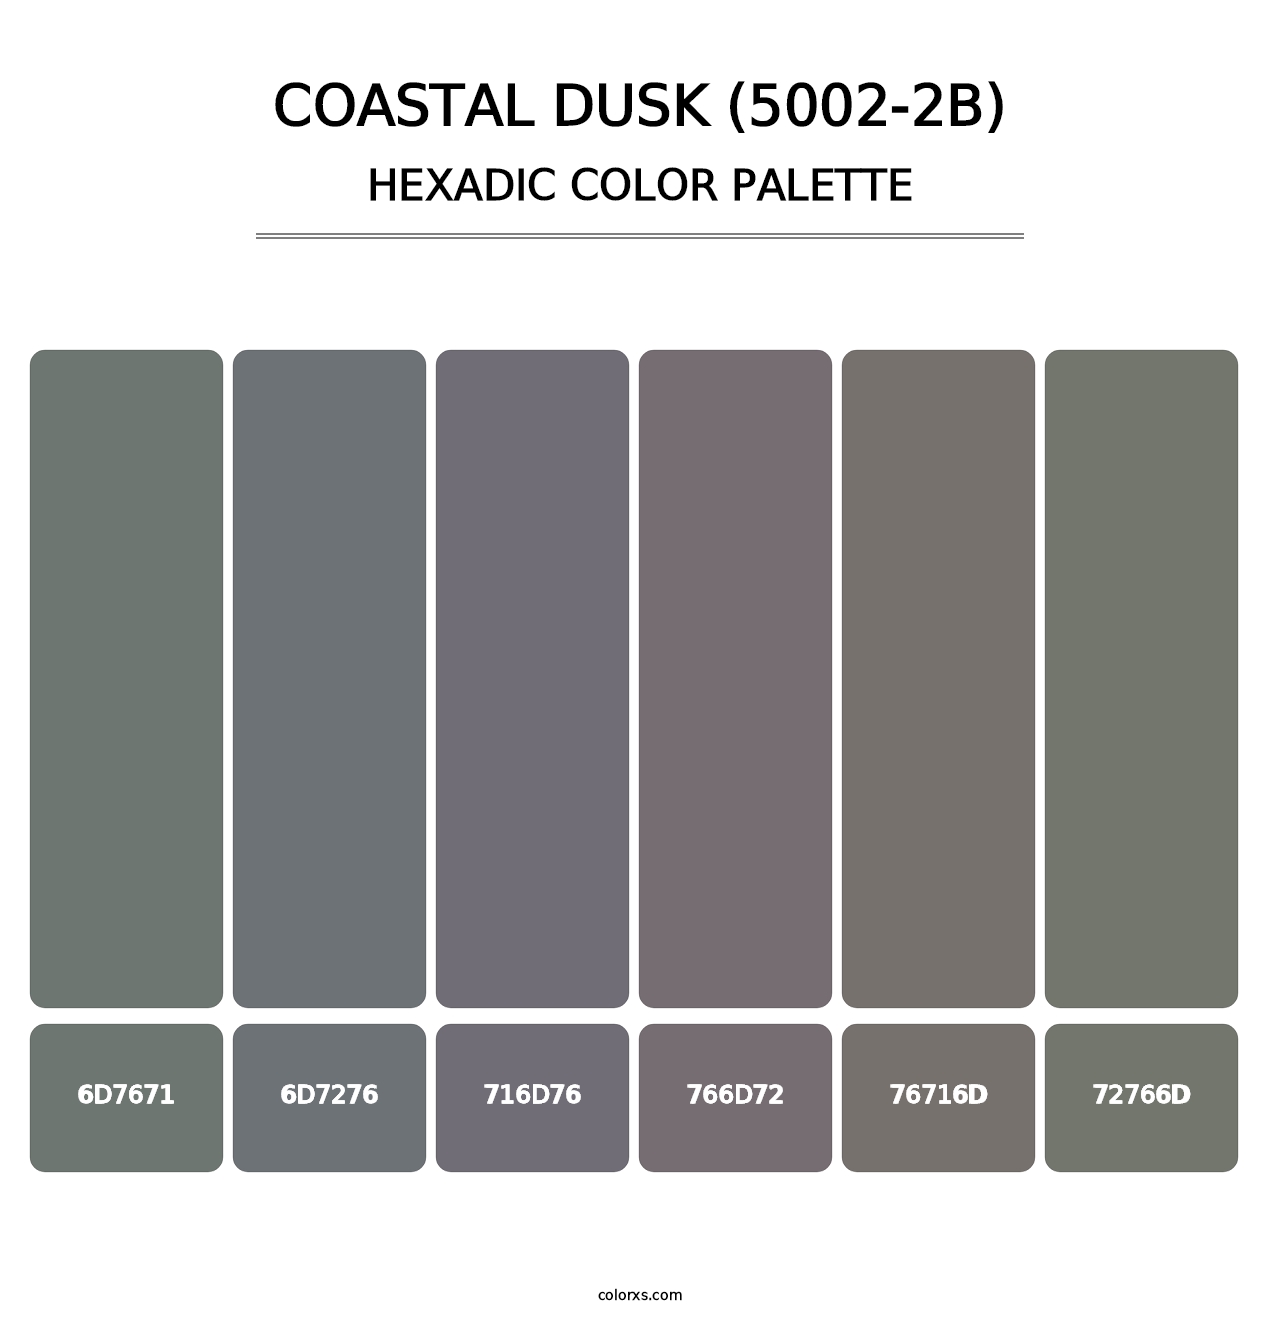 Coastal Dusk (5002-2B) - Hexadic Color Palette